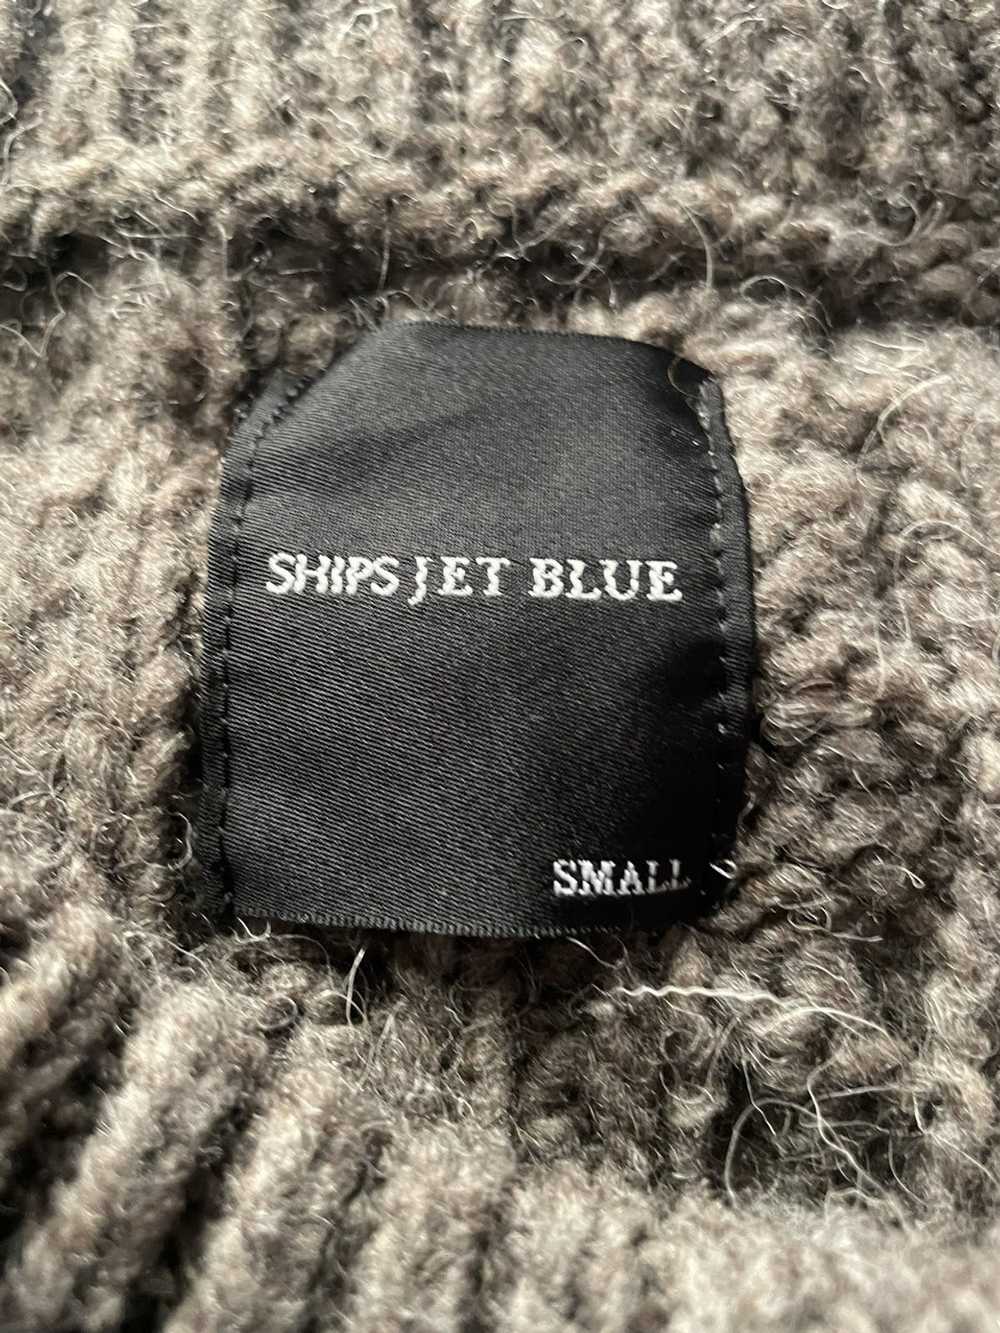 Ships Jet Blue Ships Jet Blue Knitted Sweater - image 3